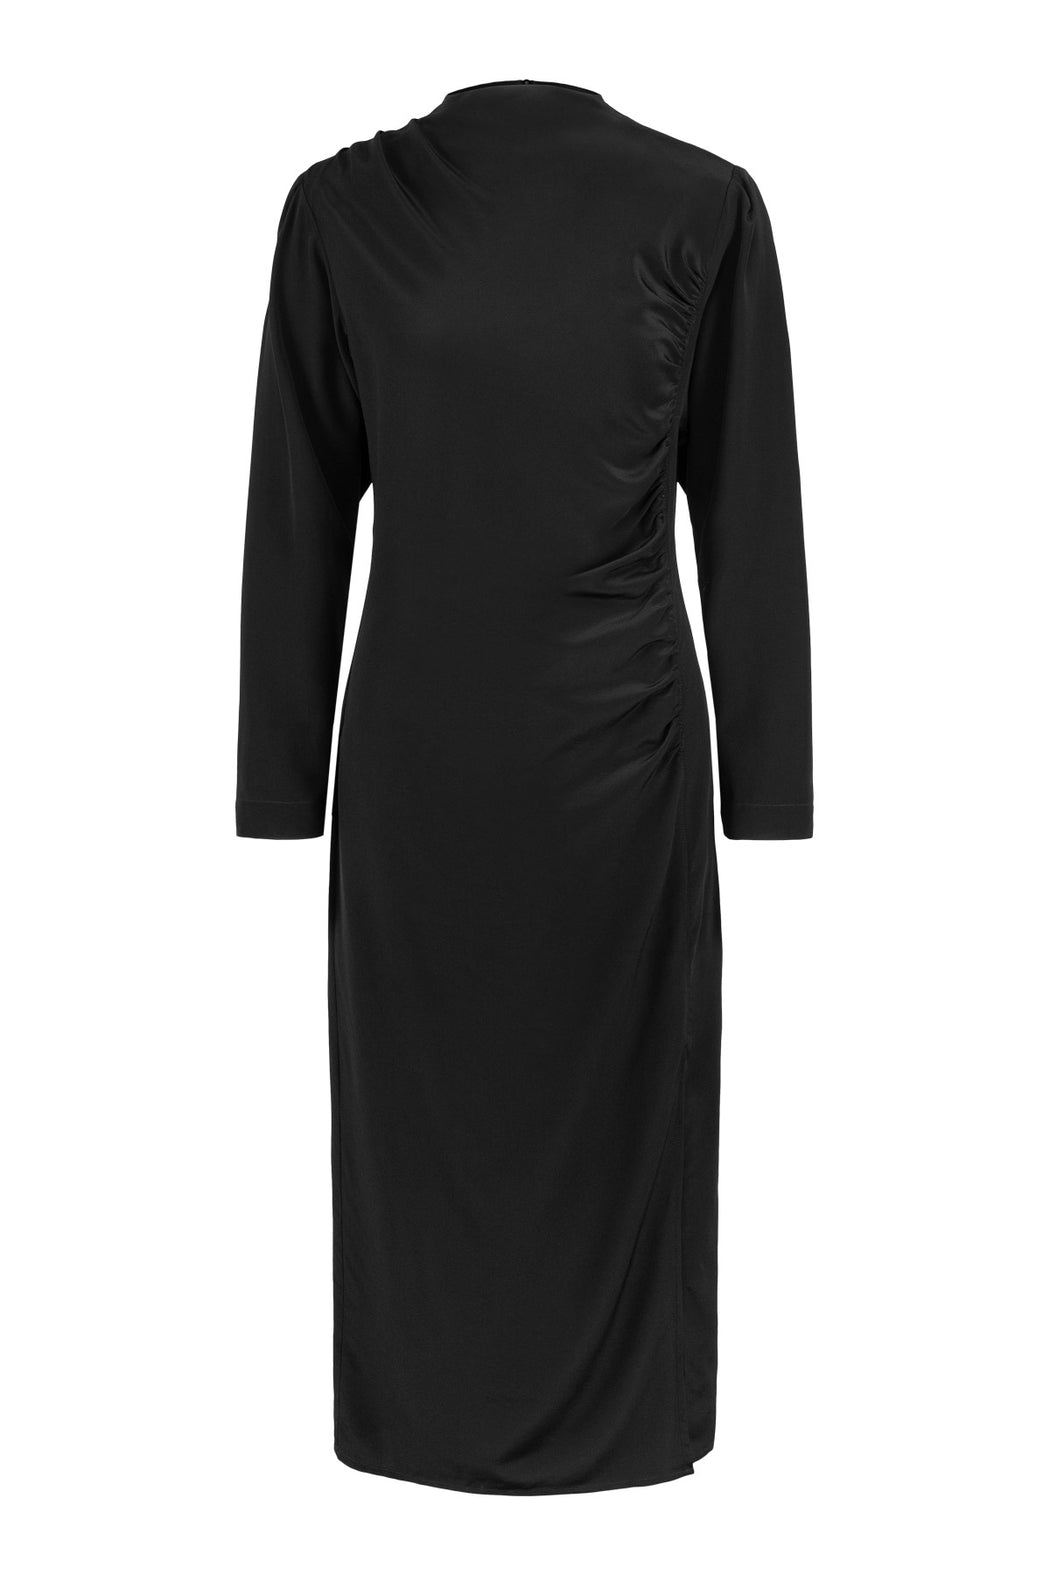 Envelope1976 Jet dress long - CDC Silk Dress Black